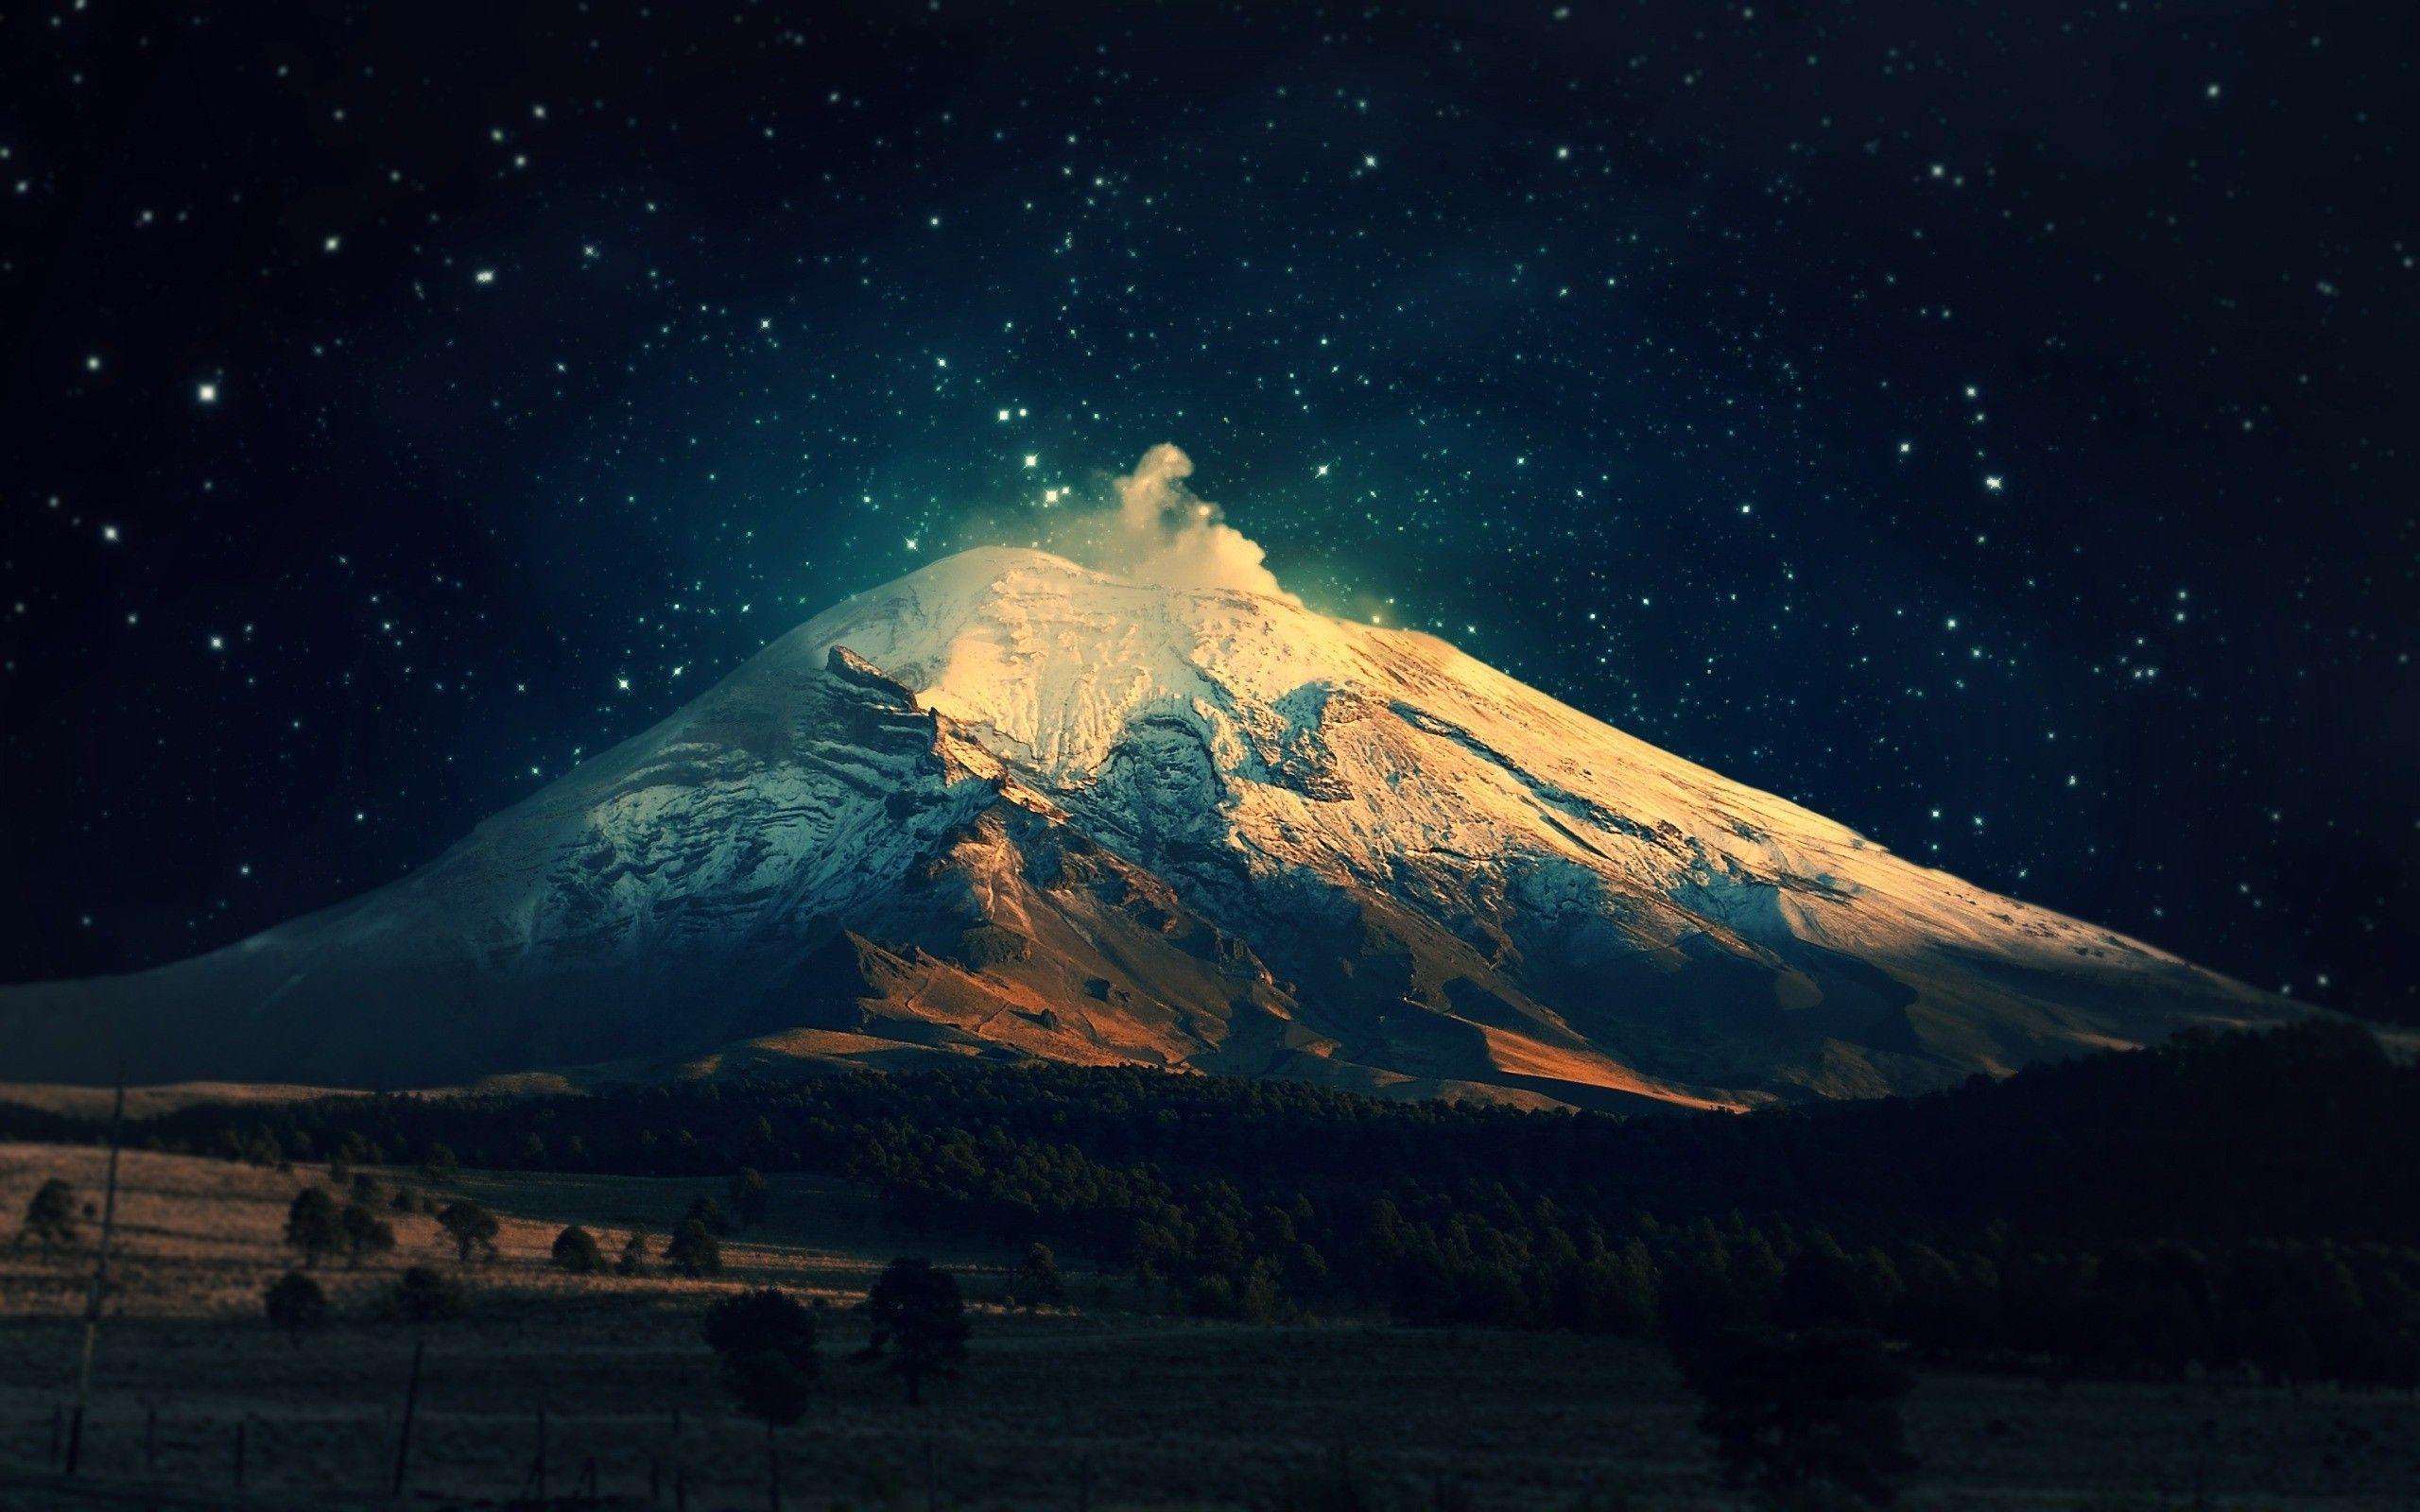 Night mountain and lake view 4K wallpaper download